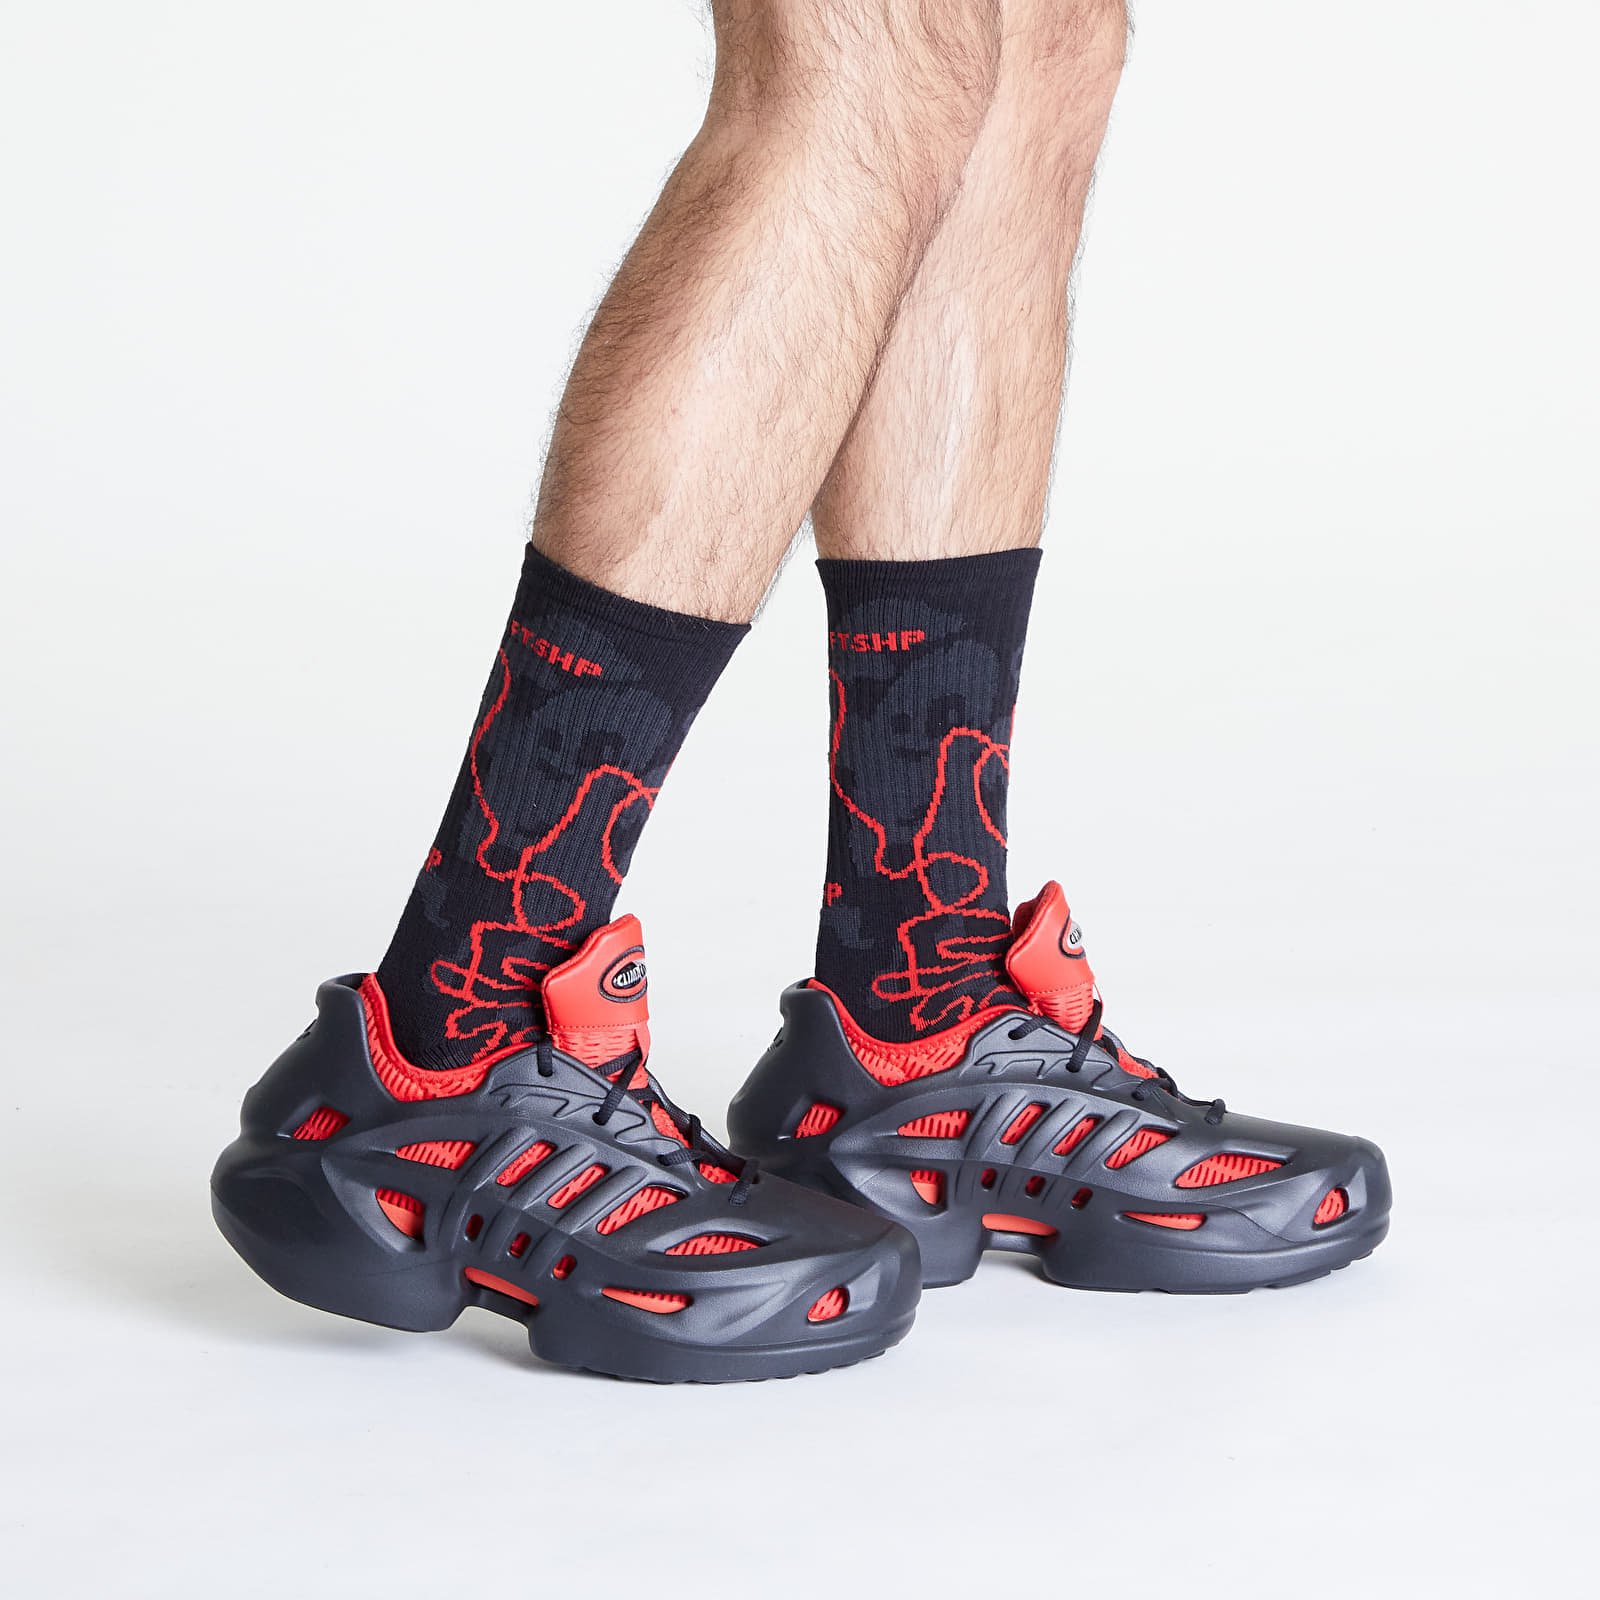 The More Basketball Socks